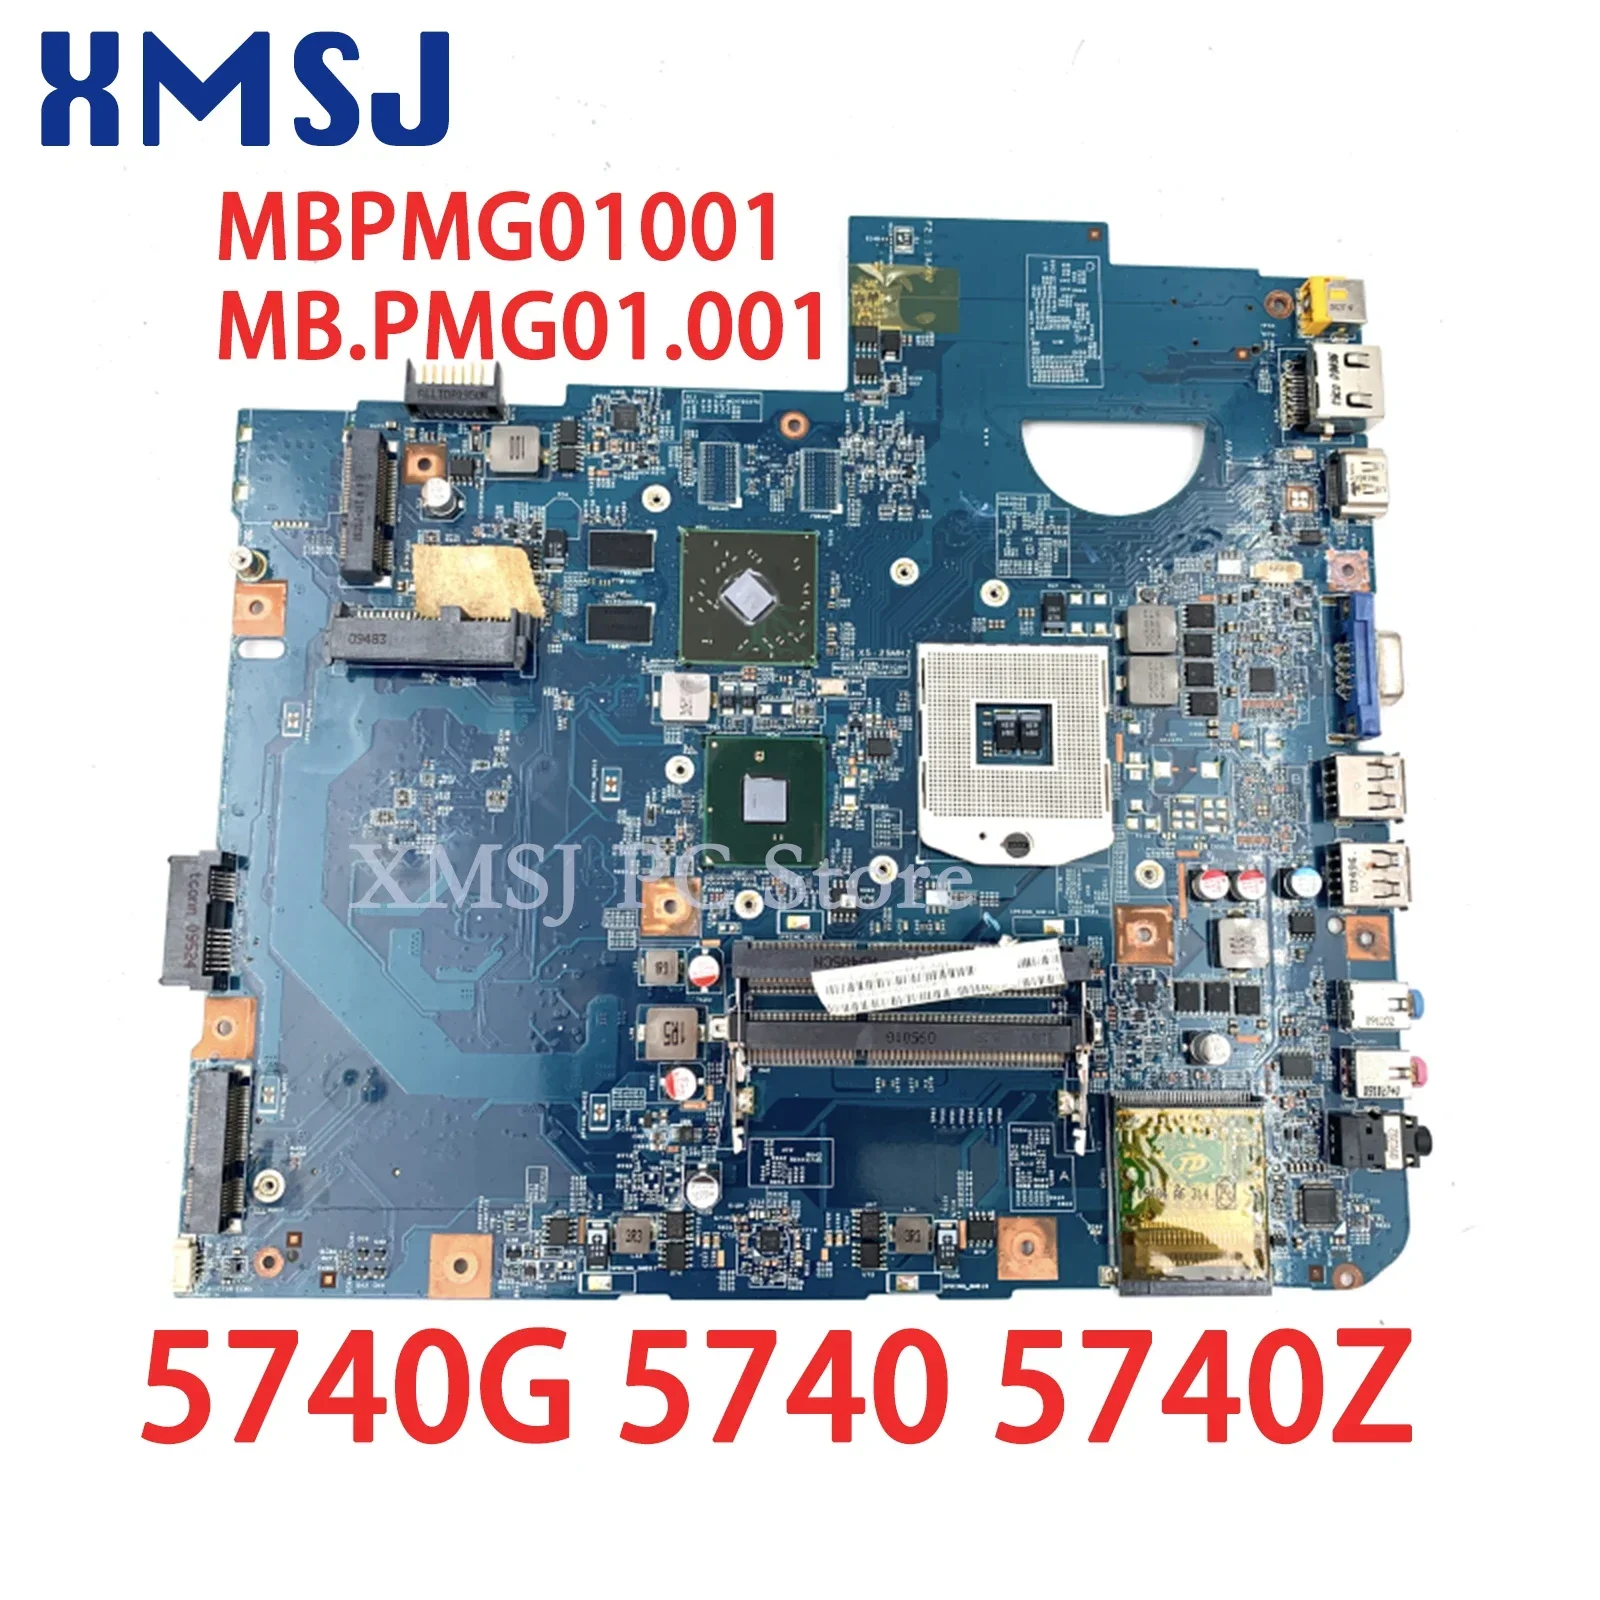 

XMSJ For Acer Aspire 5740G 5740 5740Z Laptop Motherboard 48.4GD01.01M MBPMG01001 MB.PMG01.001 HM55 DDR3 512MB GPU Free Cpu